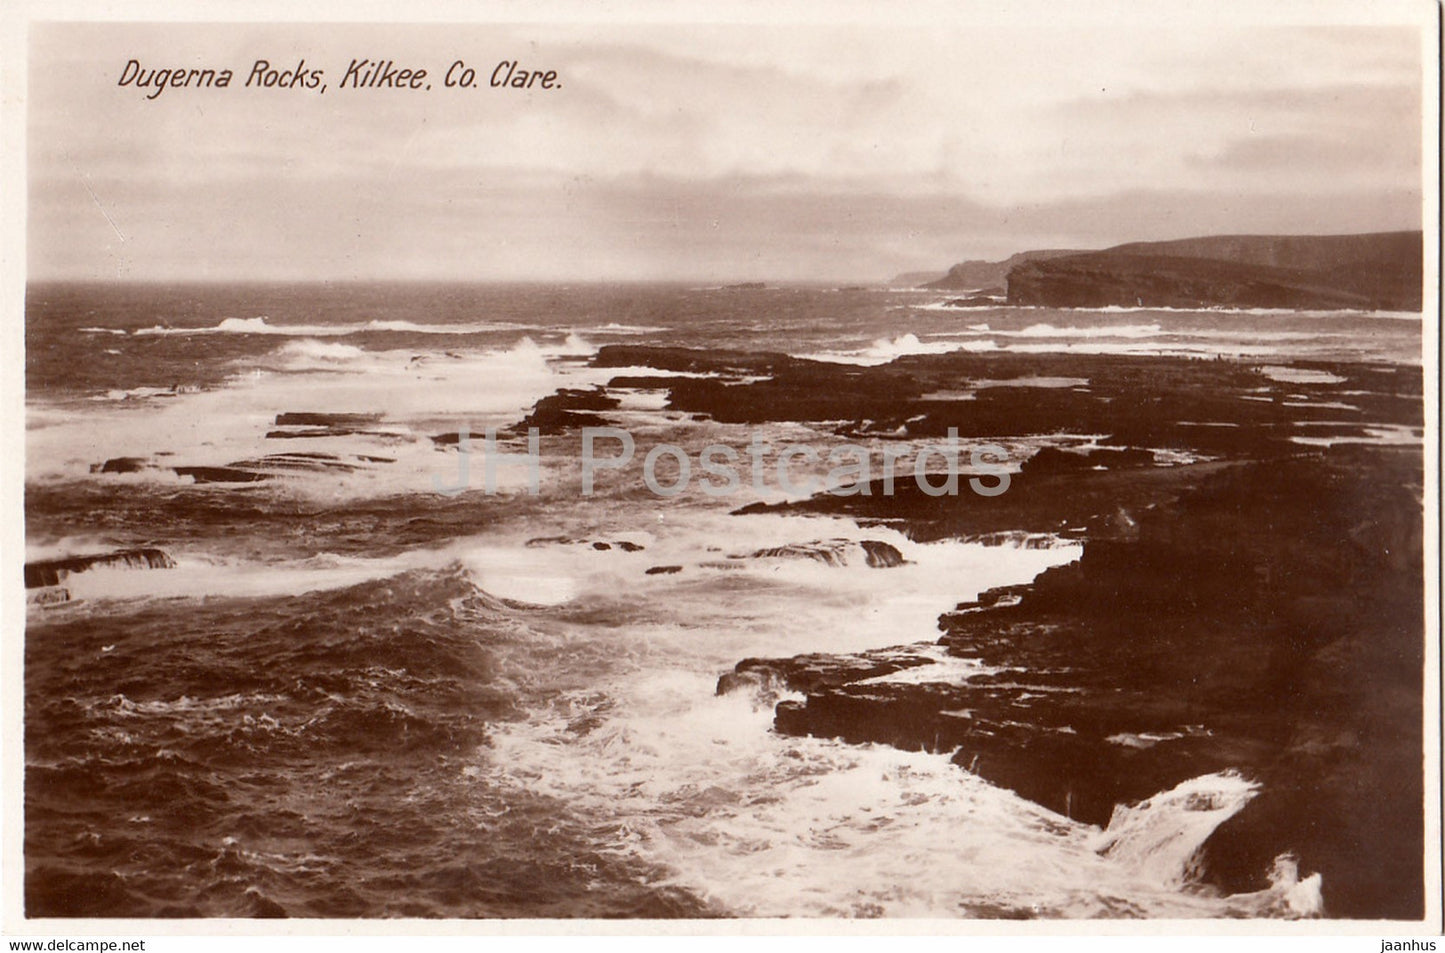 Dugerna Rocks - Kilkee Co Clare - old postcard - Ireland - used - JH Postcards